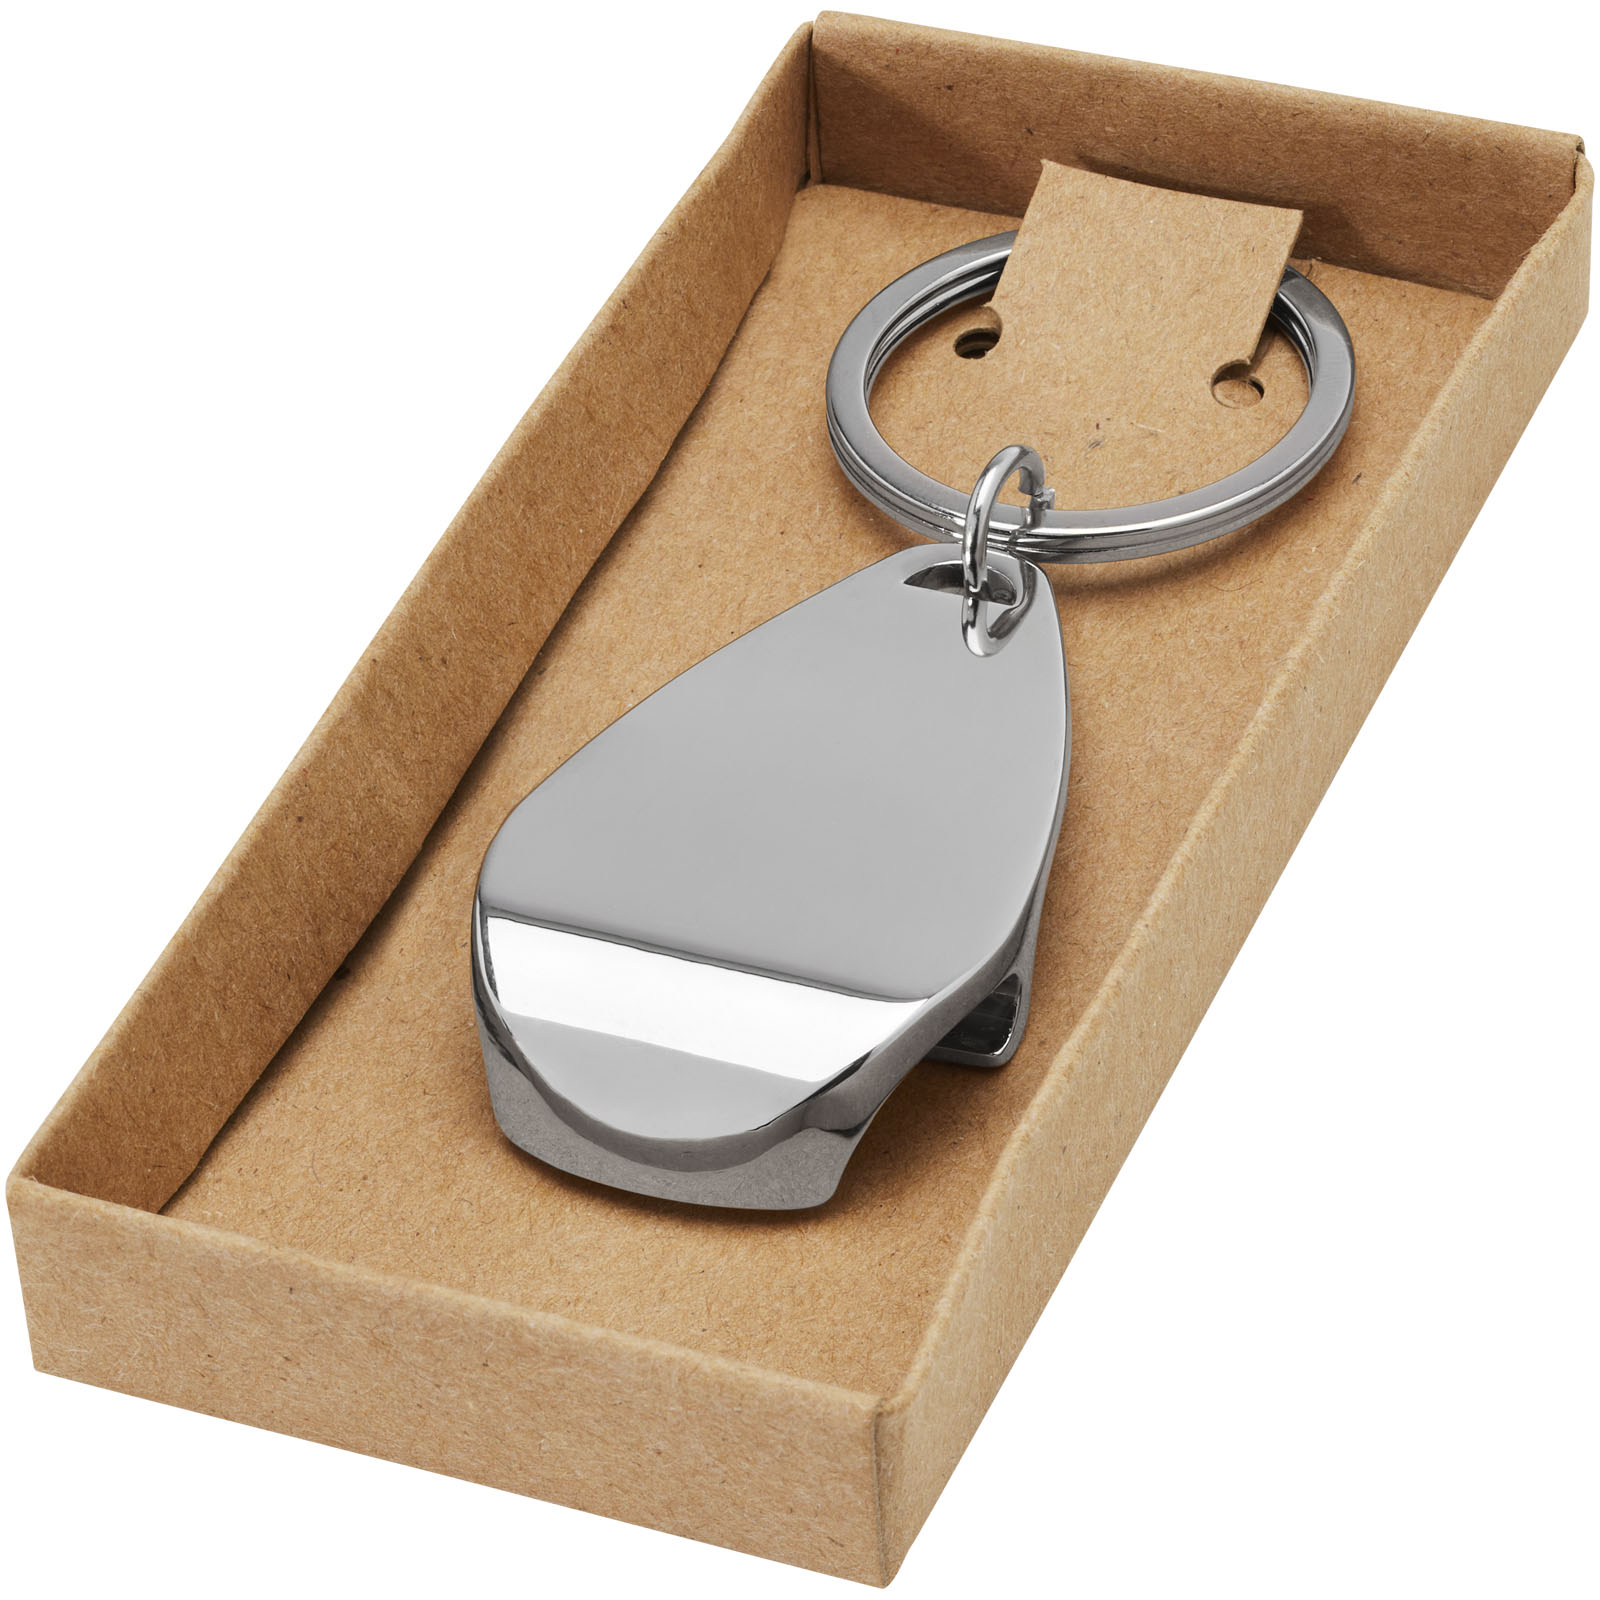 Bottle Openers & Accessories - Don bottle opener keychain